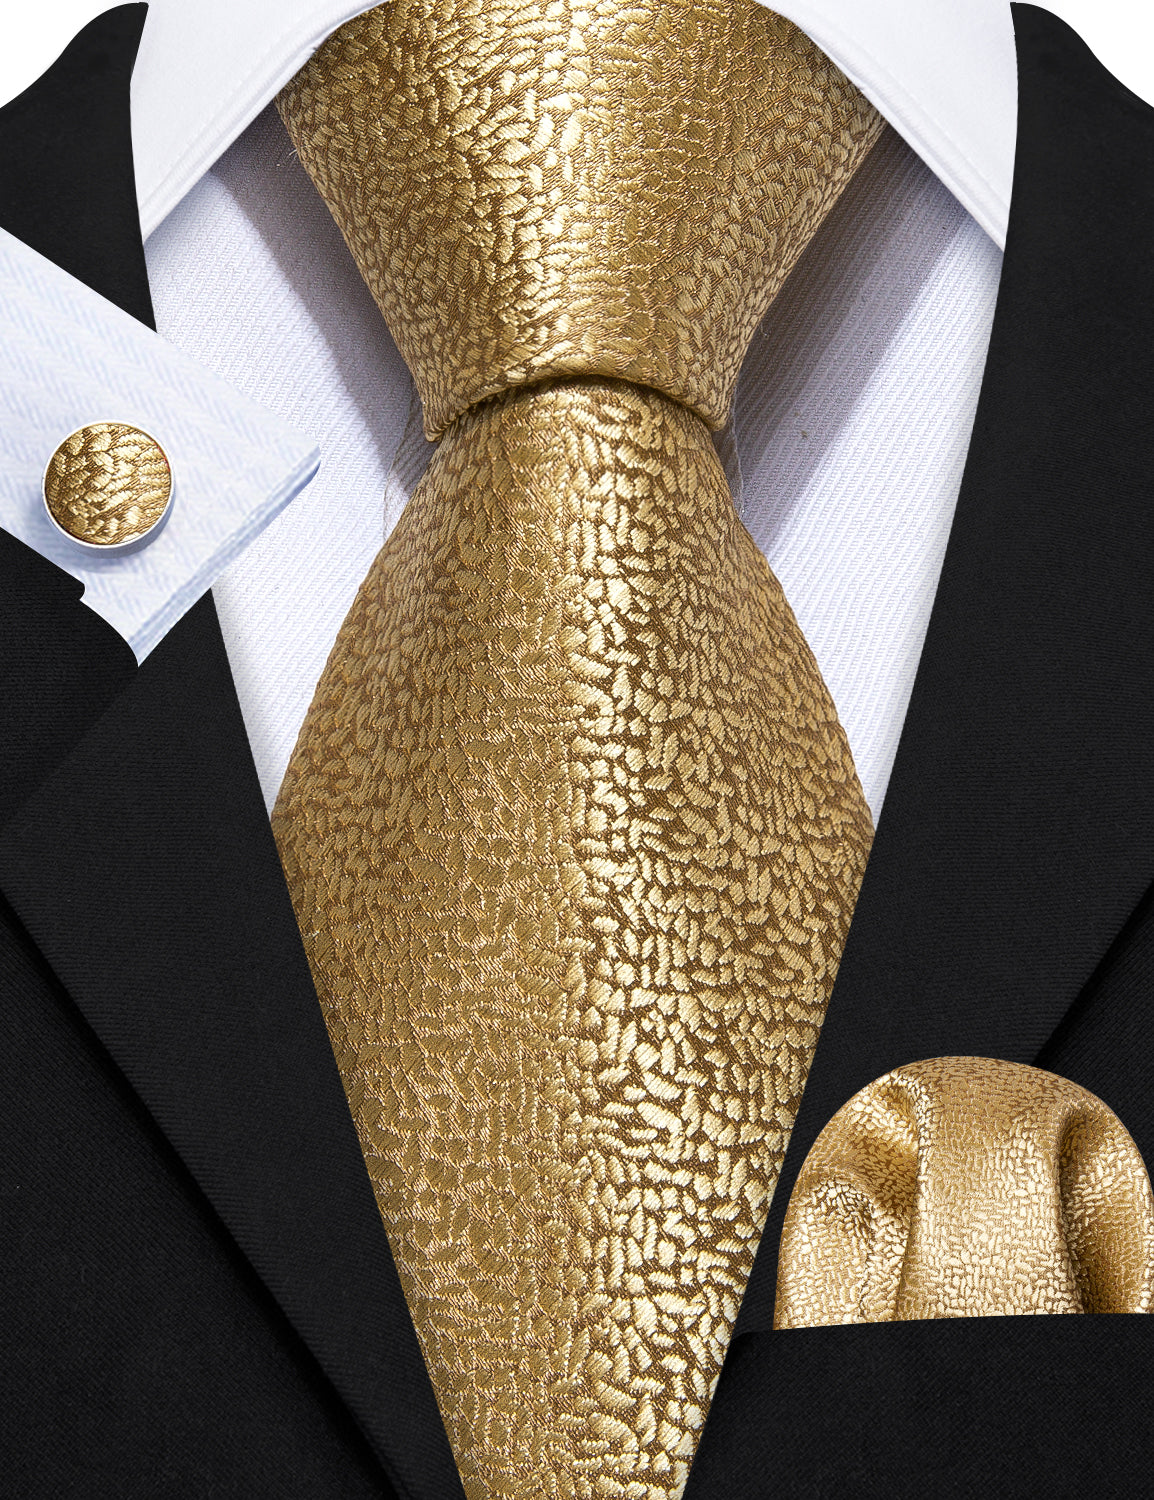 Champagne Golden Solid Tie Pocket Square Cufflinks Set